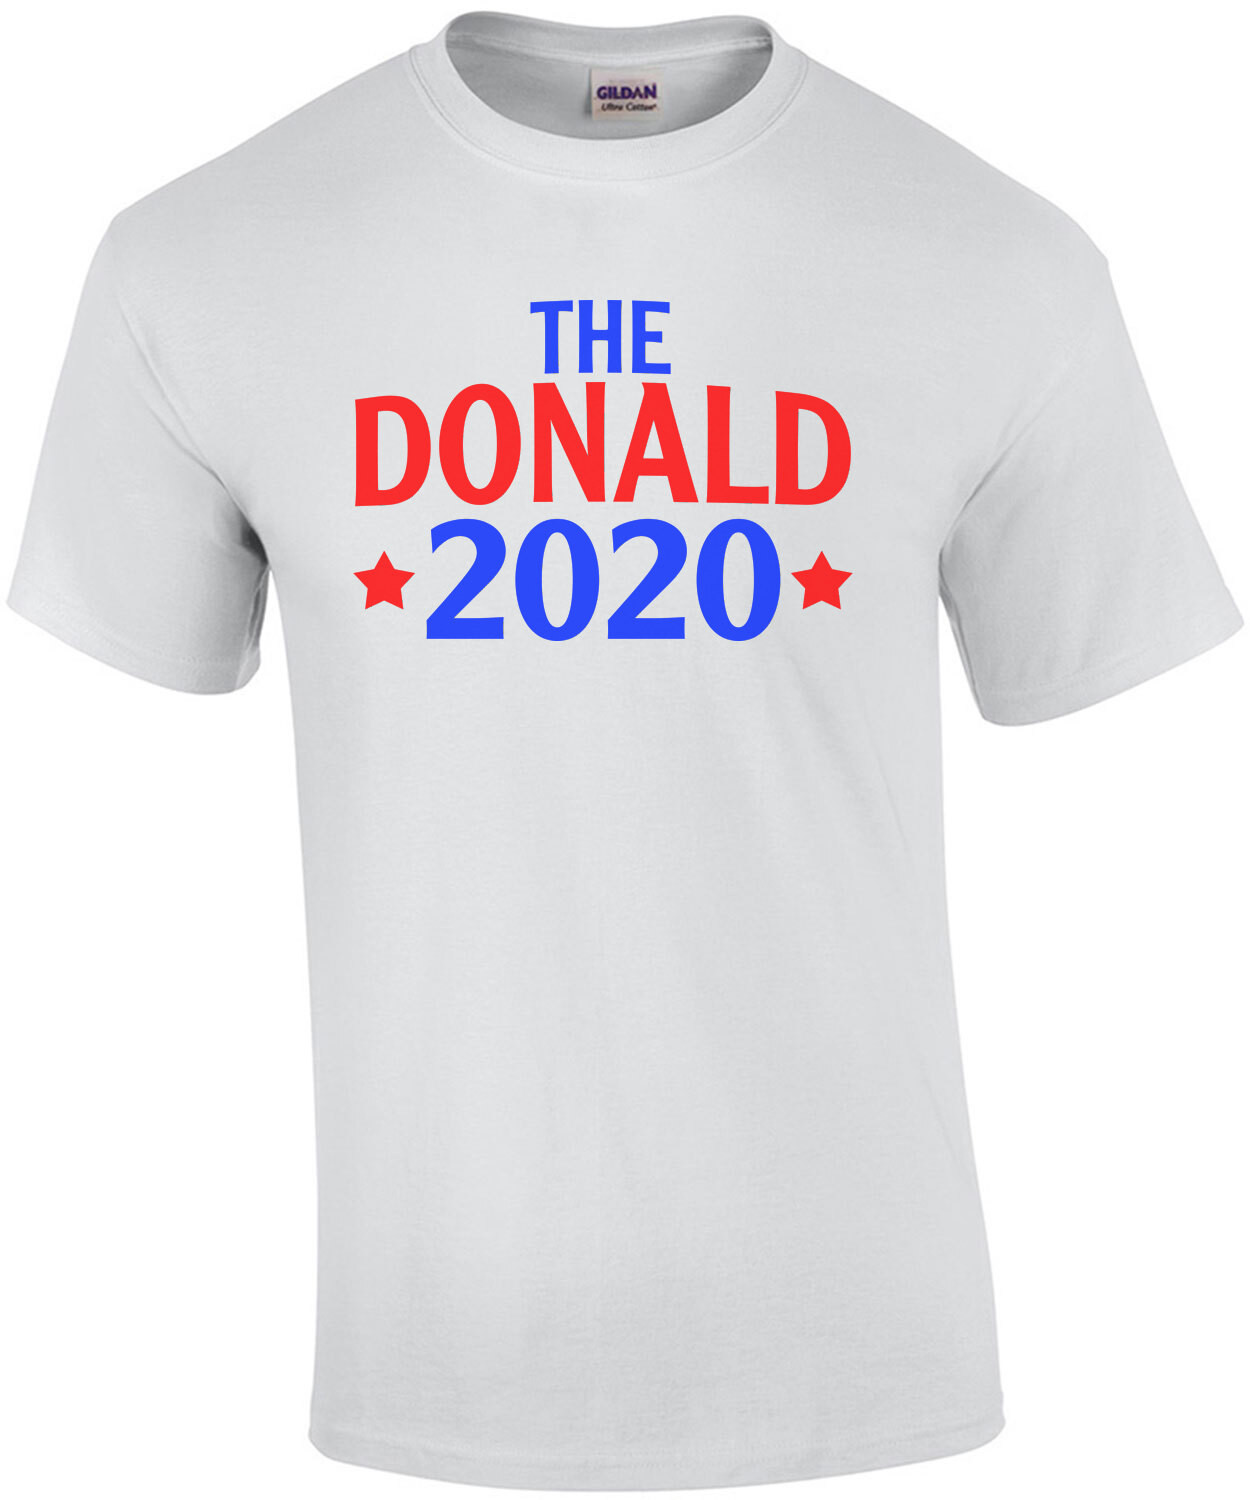 The Donald 2020 - Donald Trump For President Shirt